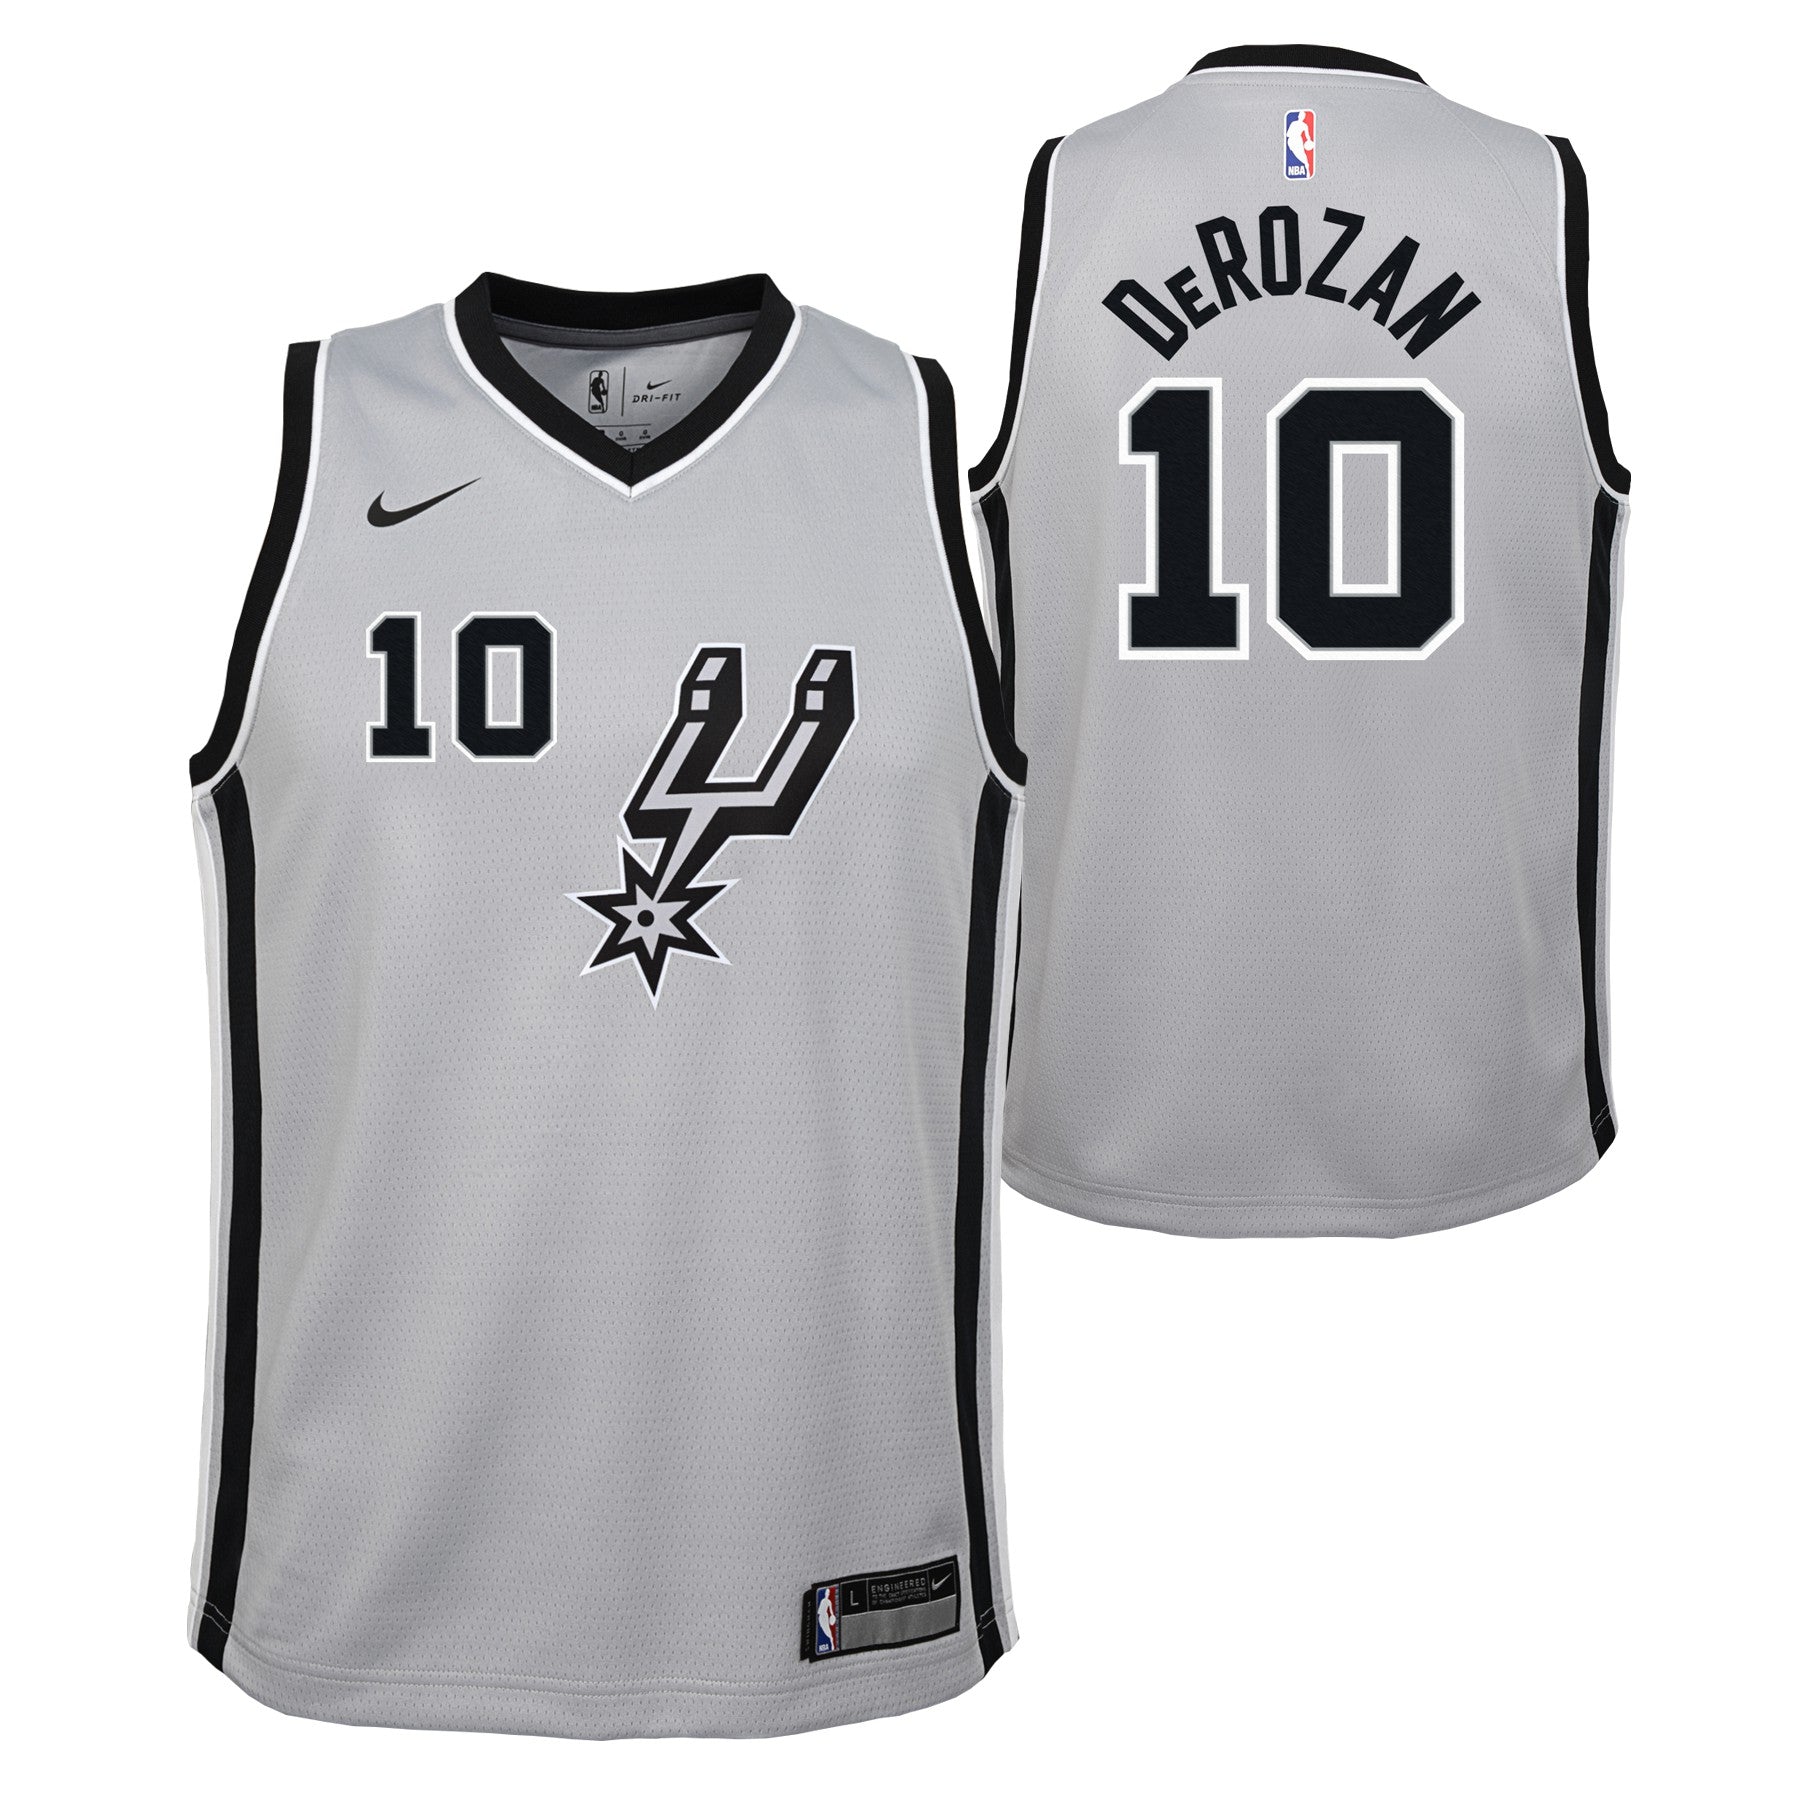 Nike San Antonio Spurs Men's Gray NBA Basketball Jacket Long